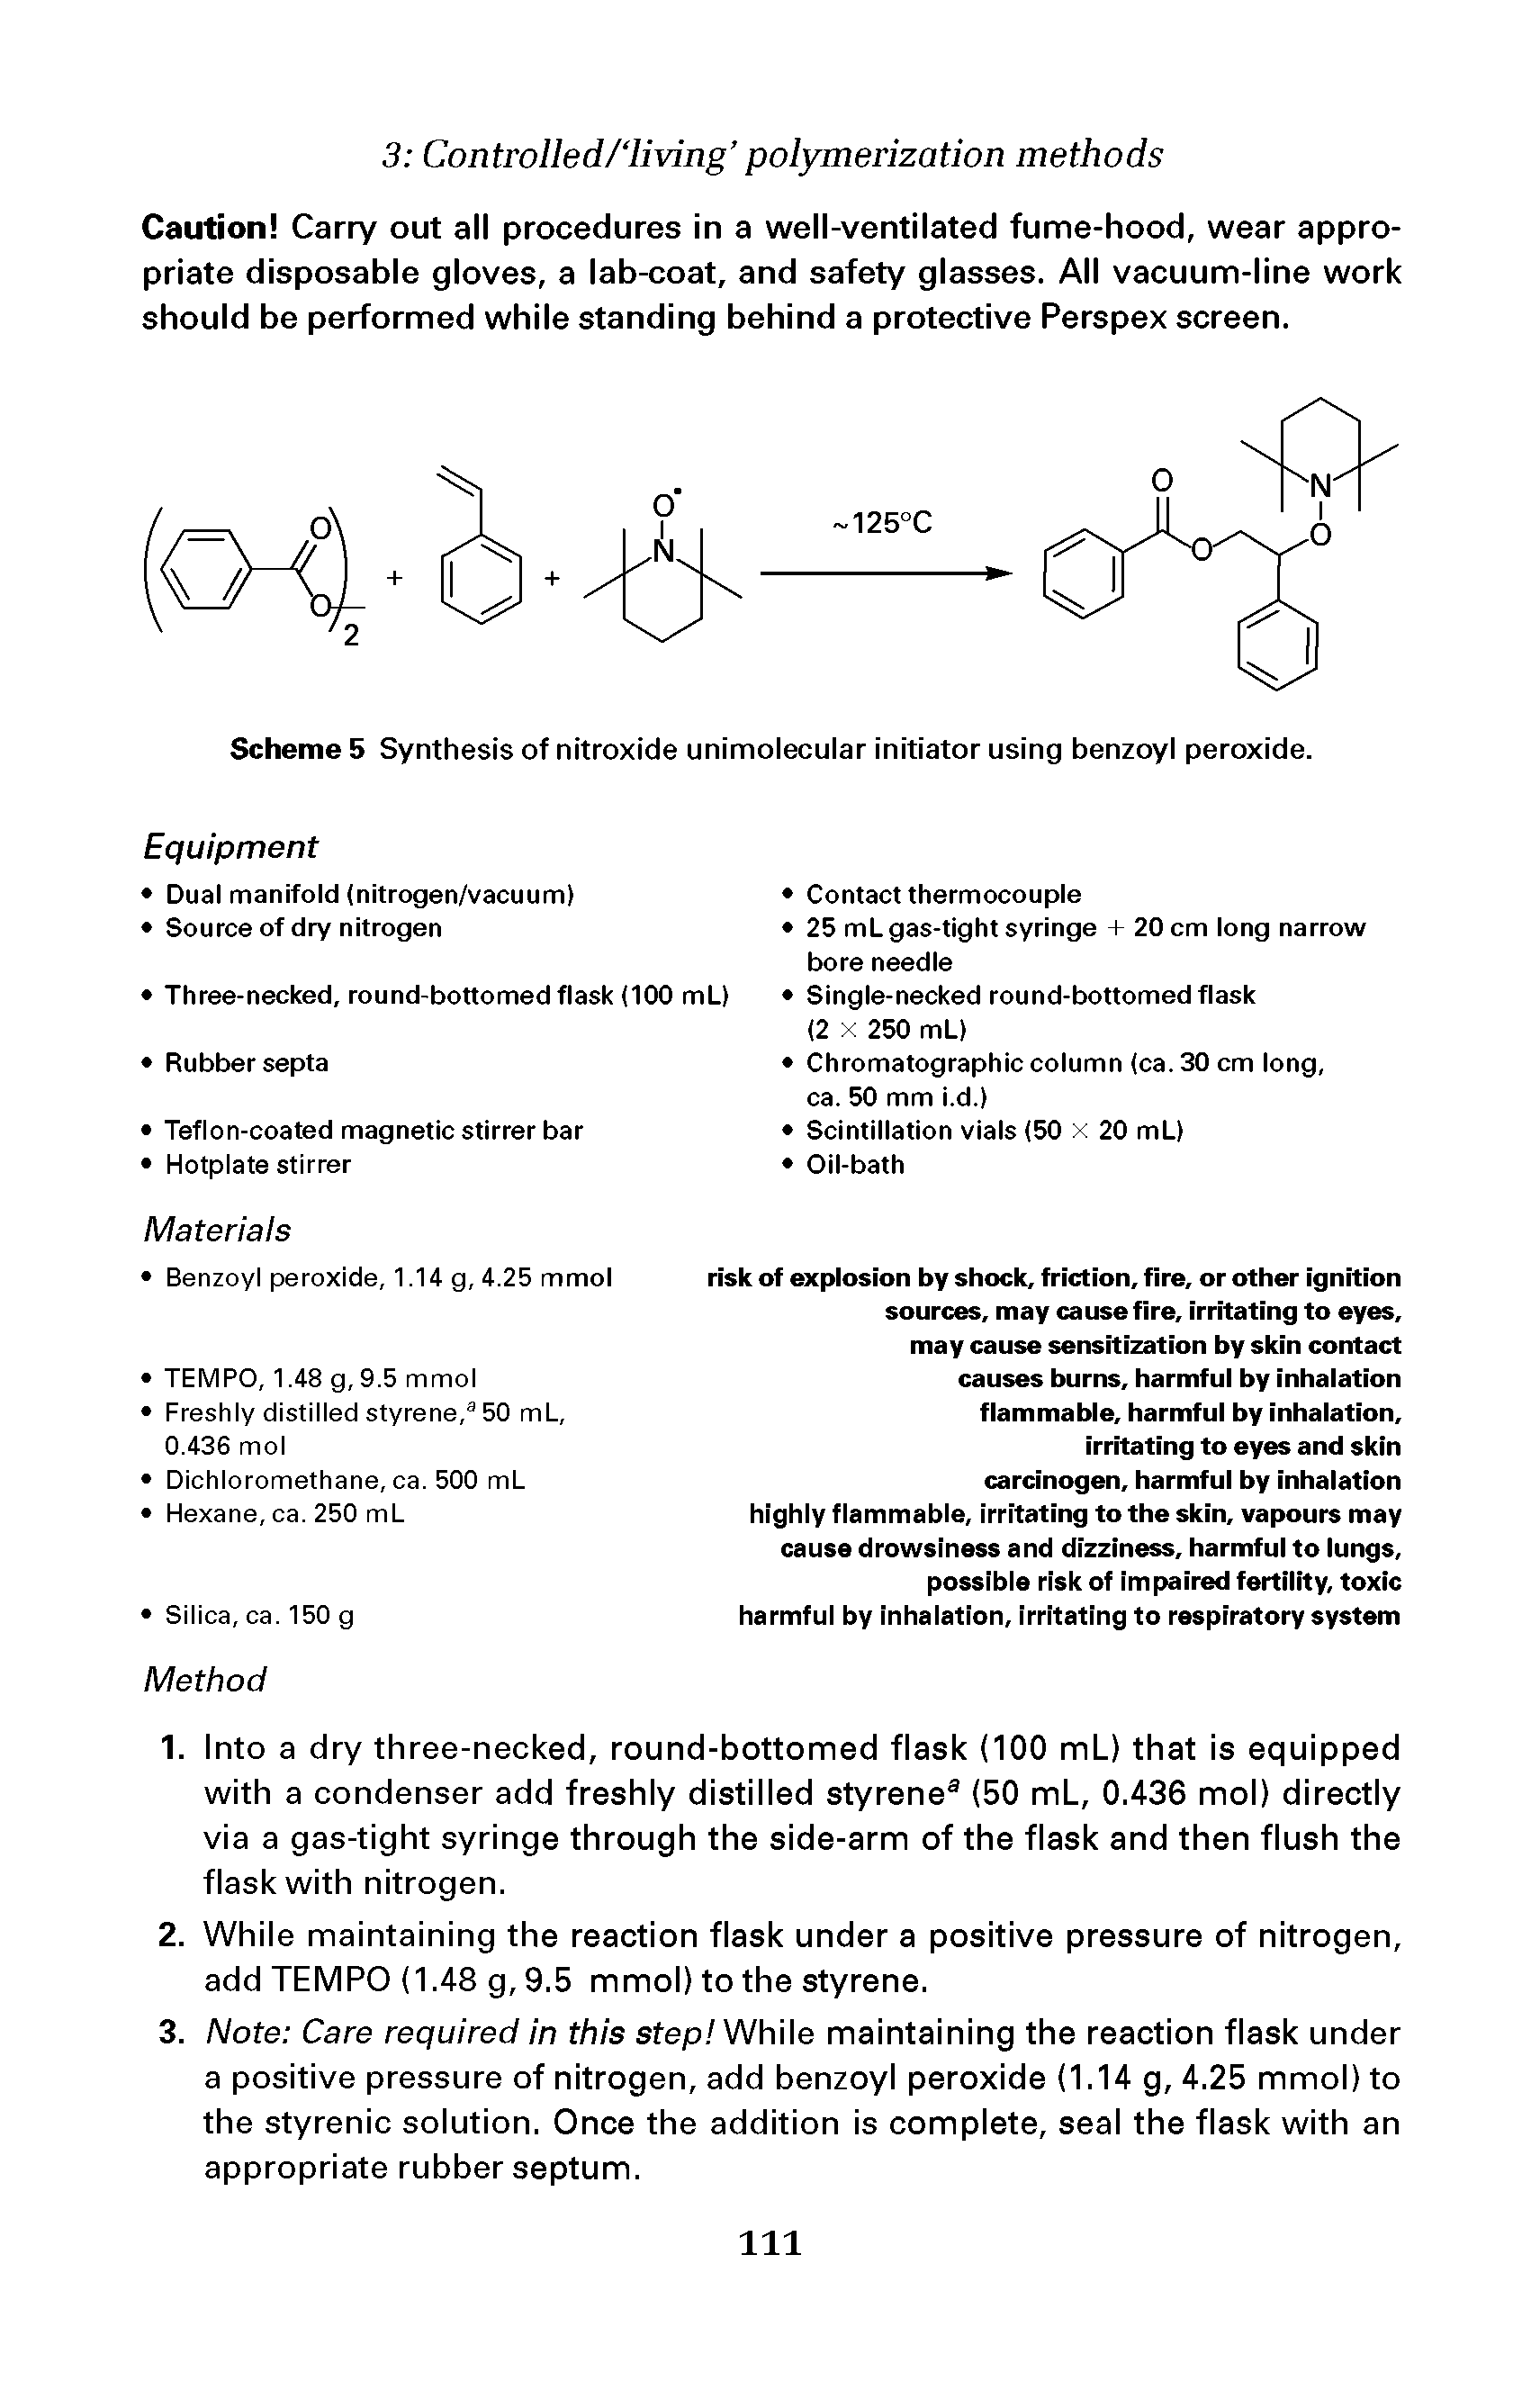 Scheme 5 Synthesis of nitroxide unimolecular initiator using benzoyl peroxide.